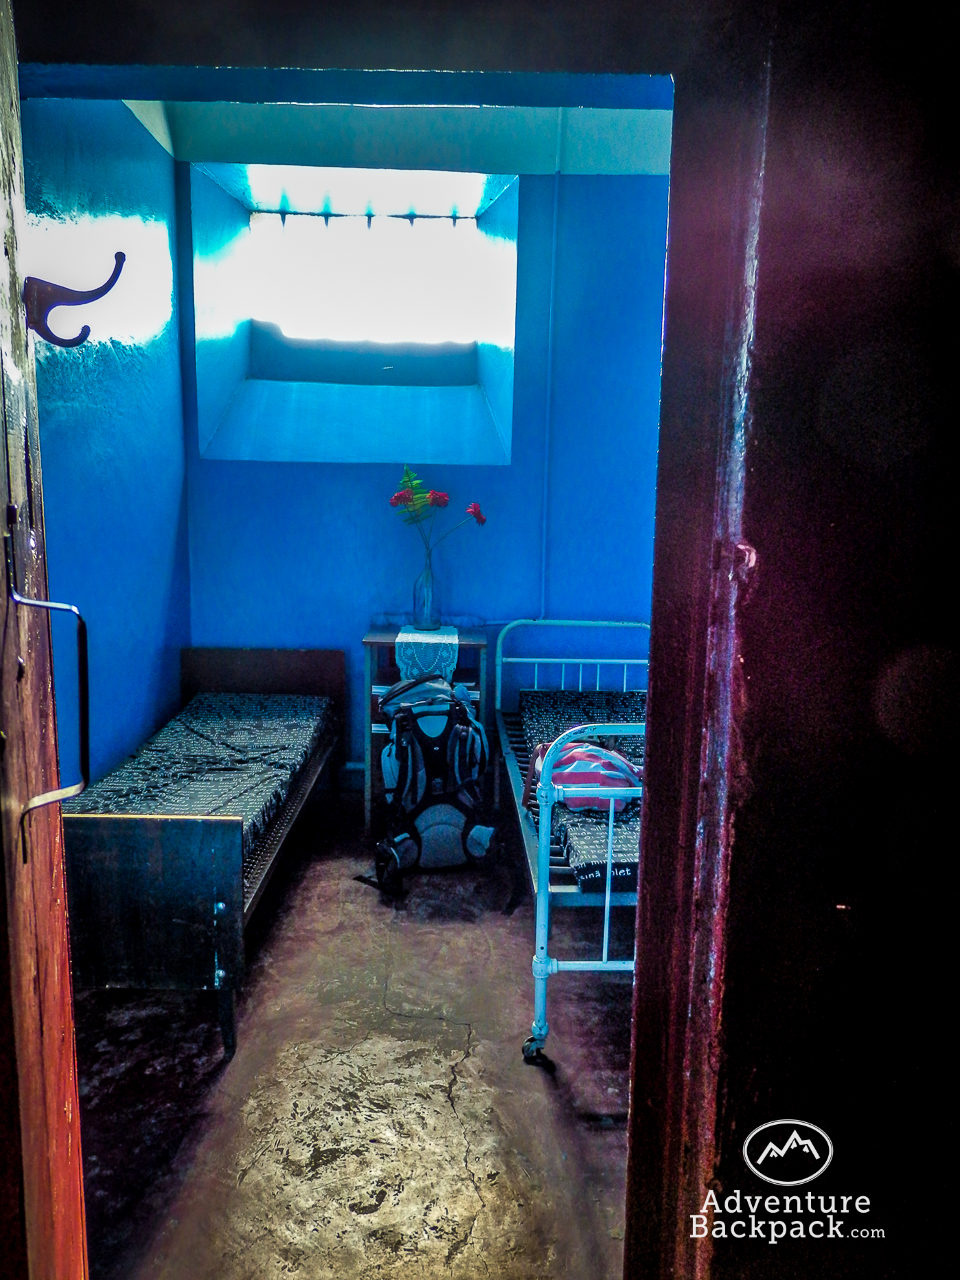 Spannende overnachting in Karosta gevangenis